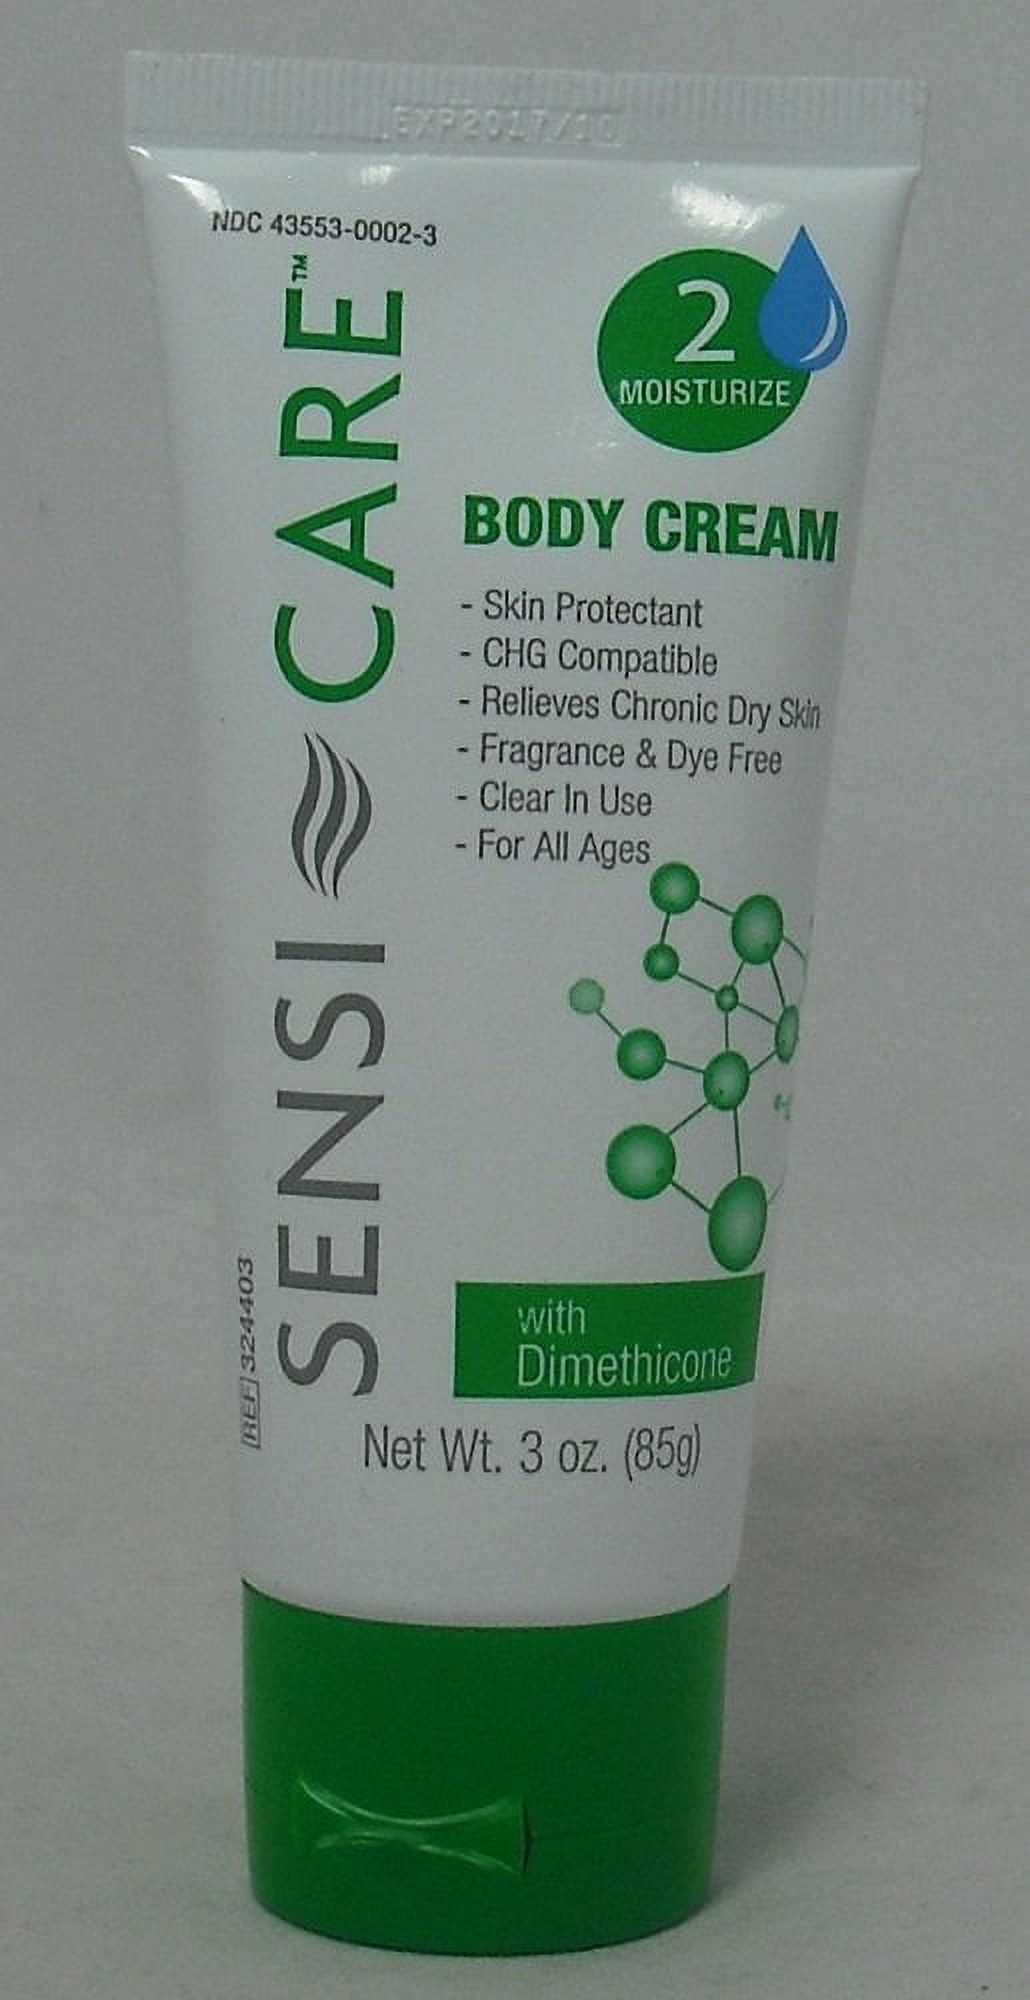 Sensi-Care Hand & Body Moisturizer Cream, 3 Oz. - image 4 of 8